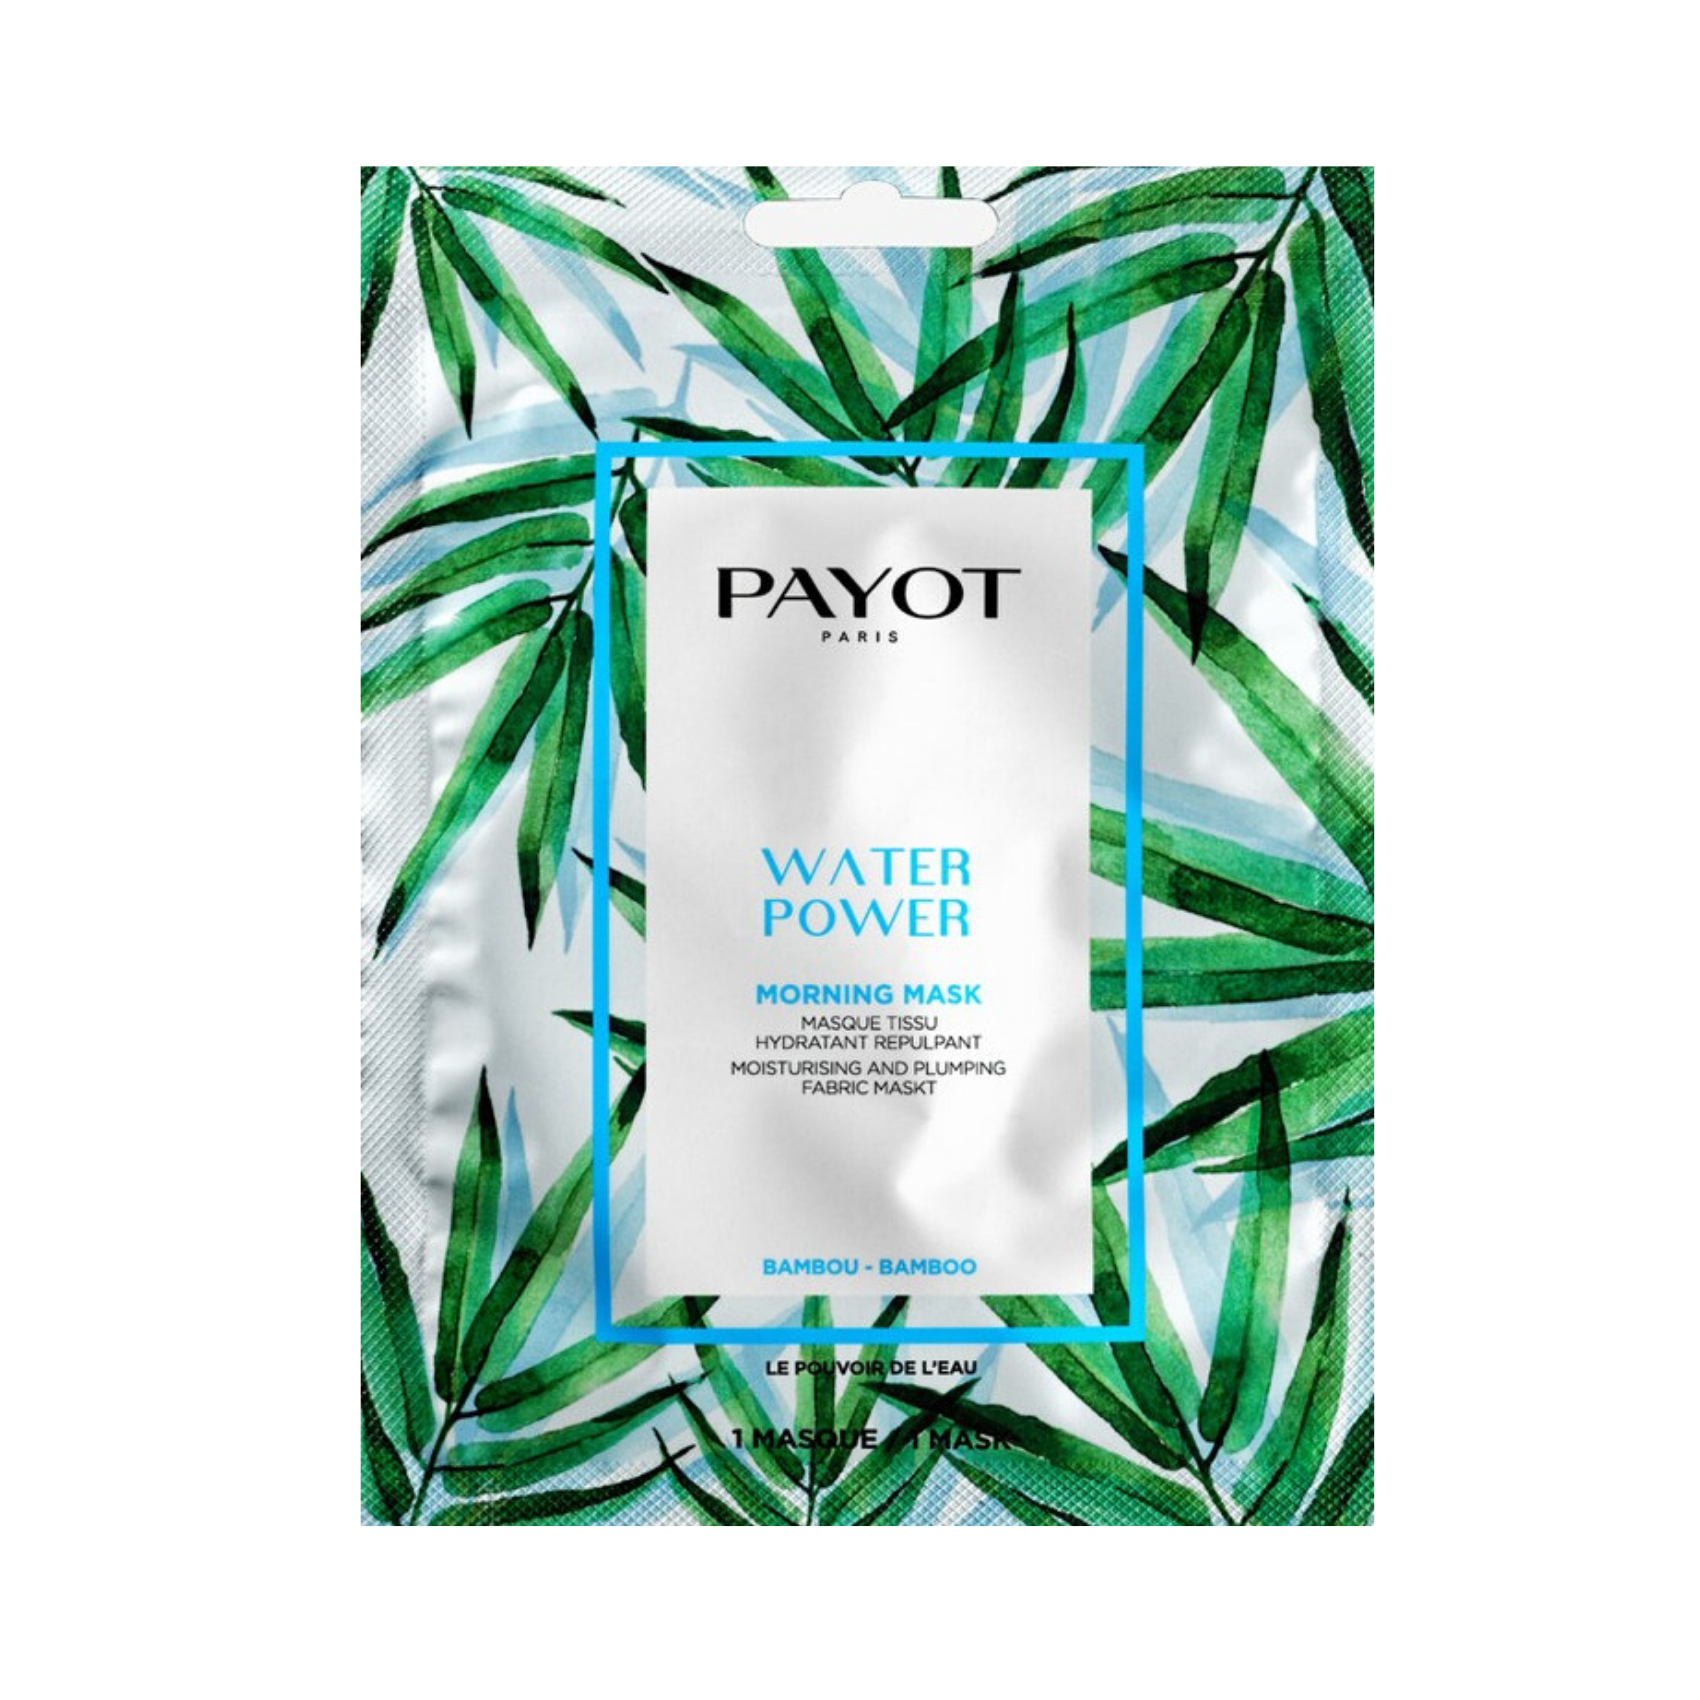 Payot Morning Mask - Water Power